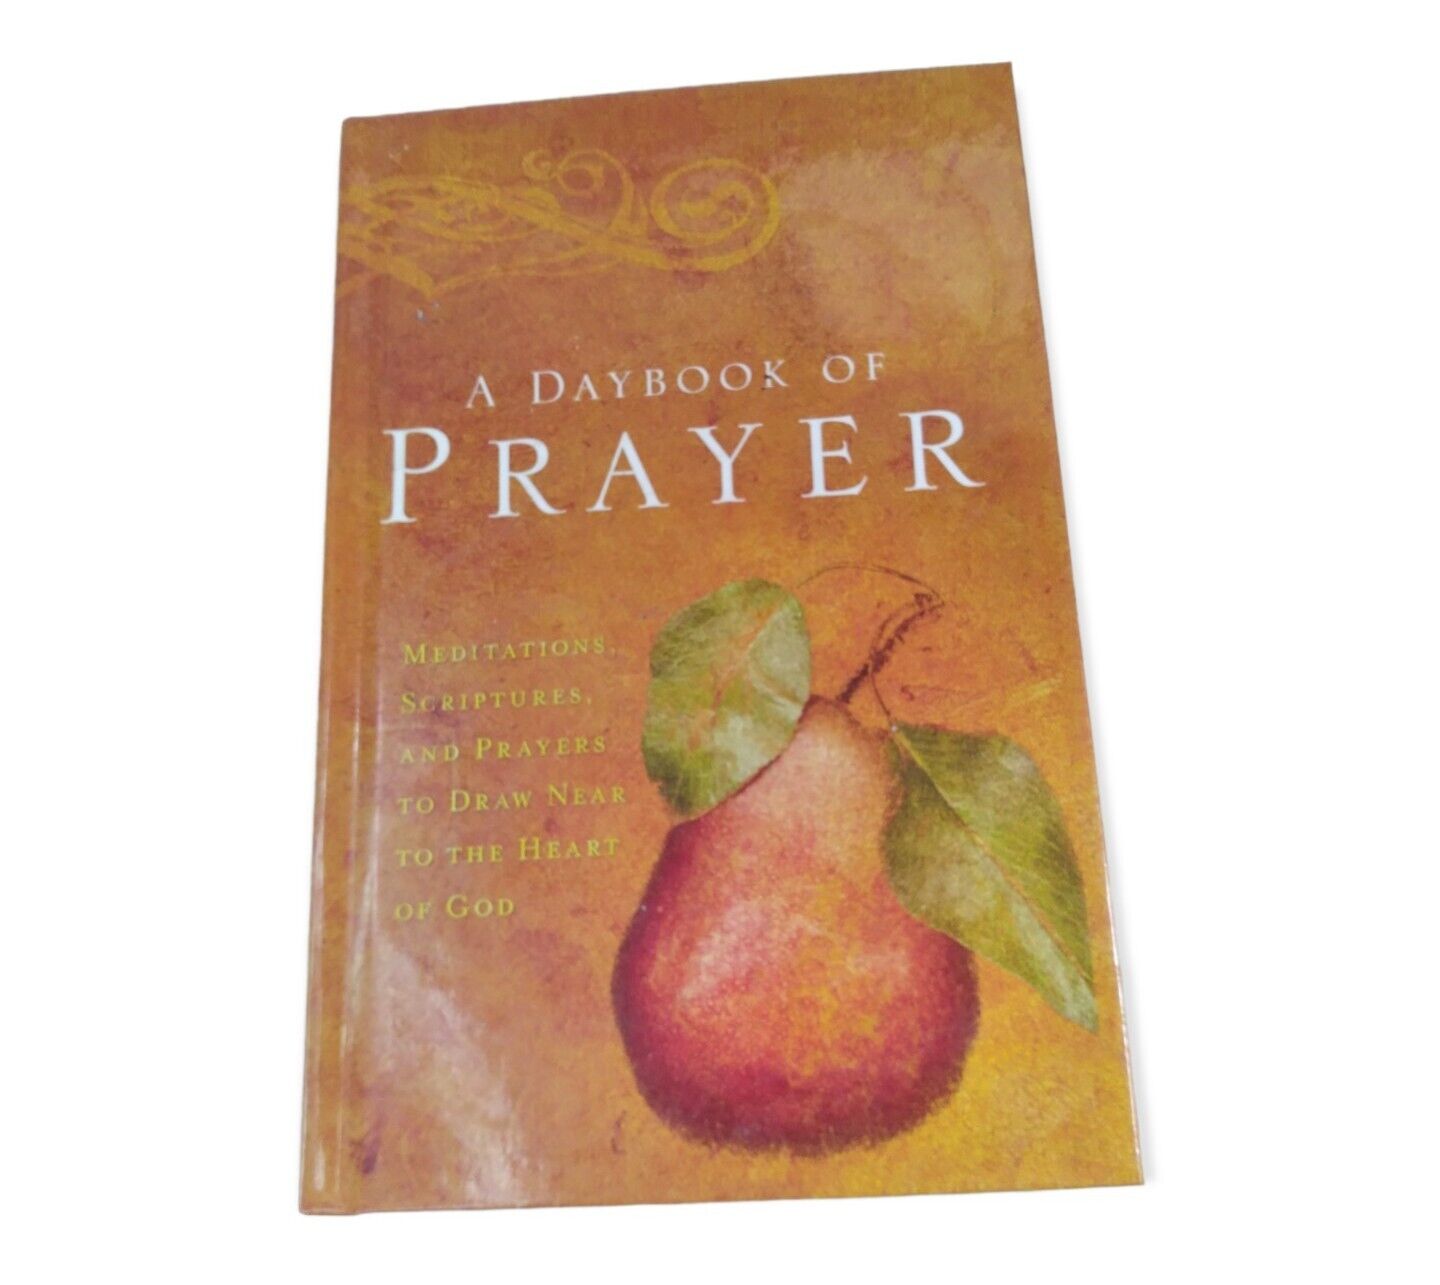 A Daybook OF Prayer An Imprint Of Thomas Nelson 2006 Hardbound Book Scriptures